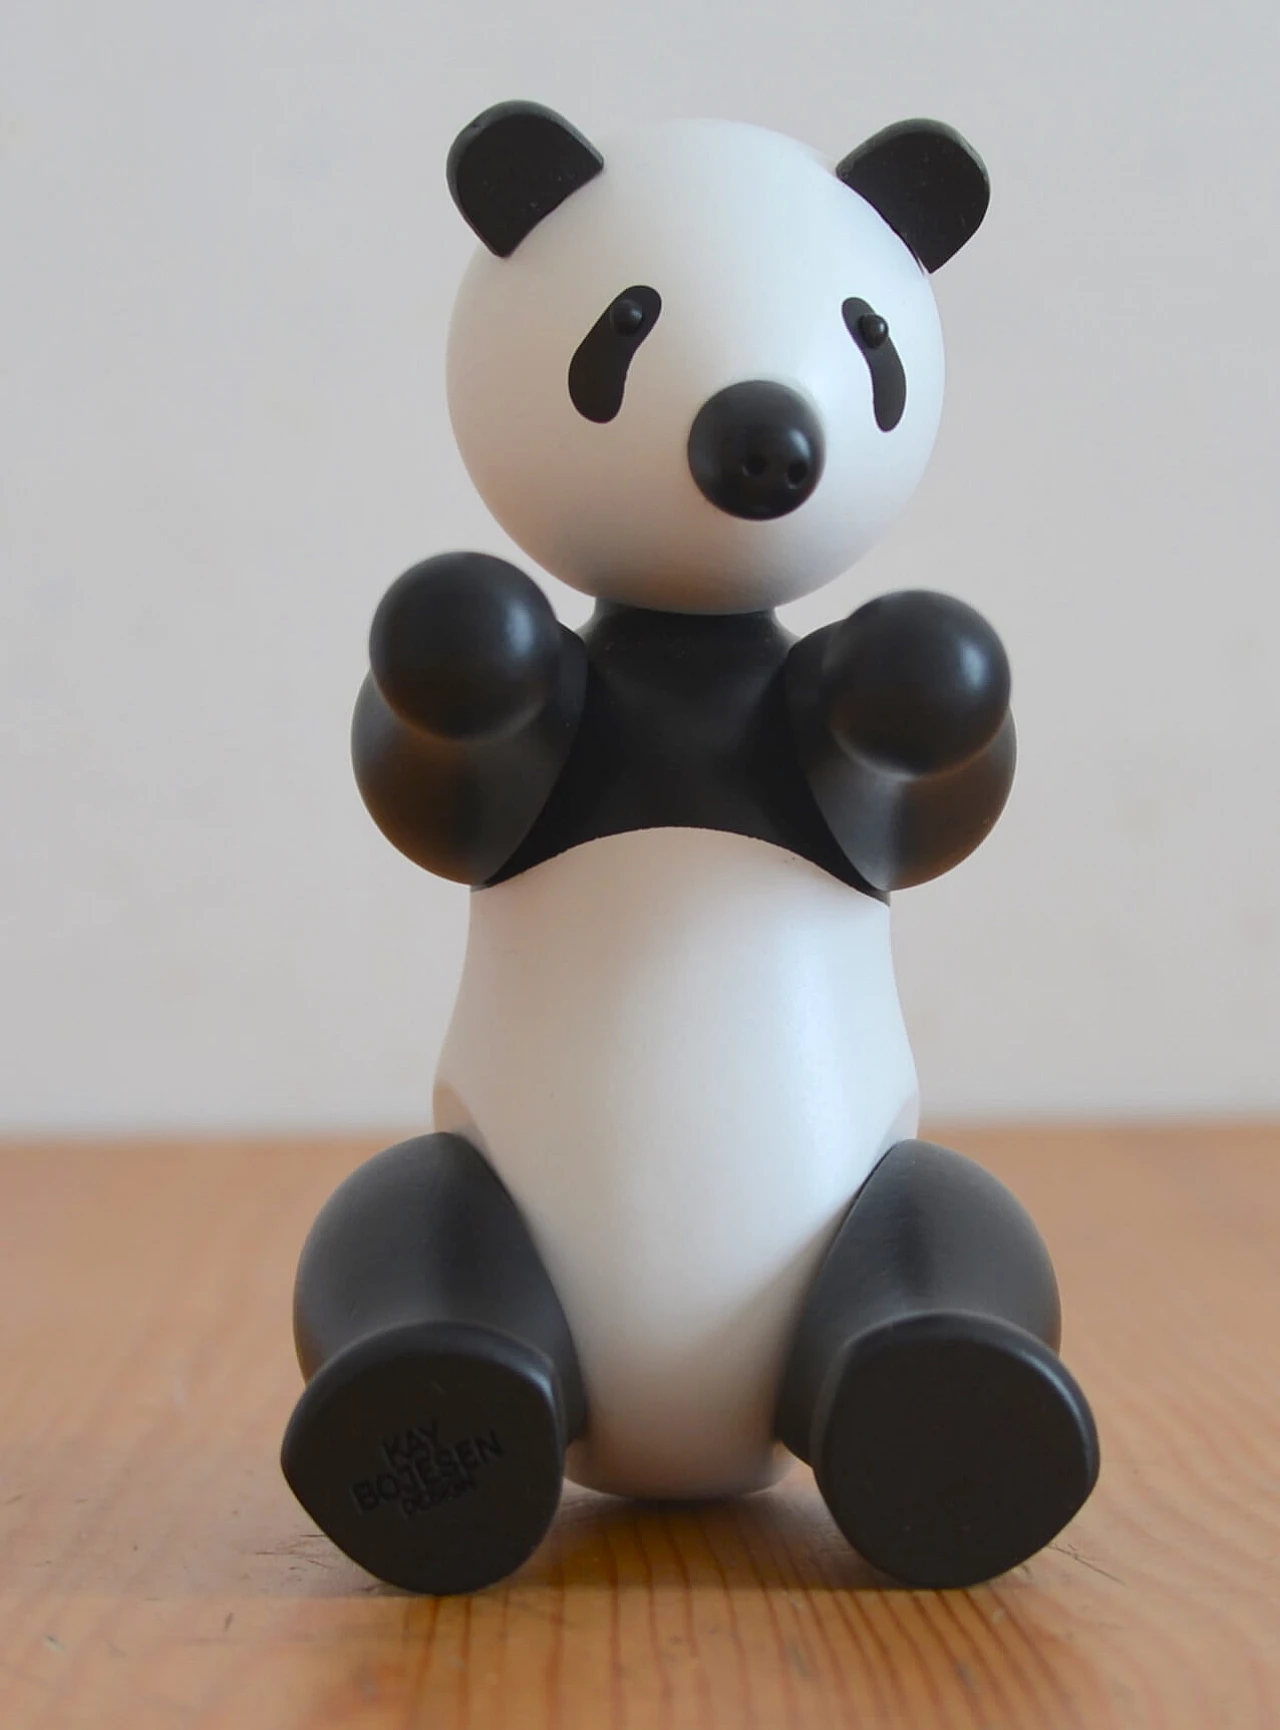 Wood Panda statuette by Kay Bojesen 5